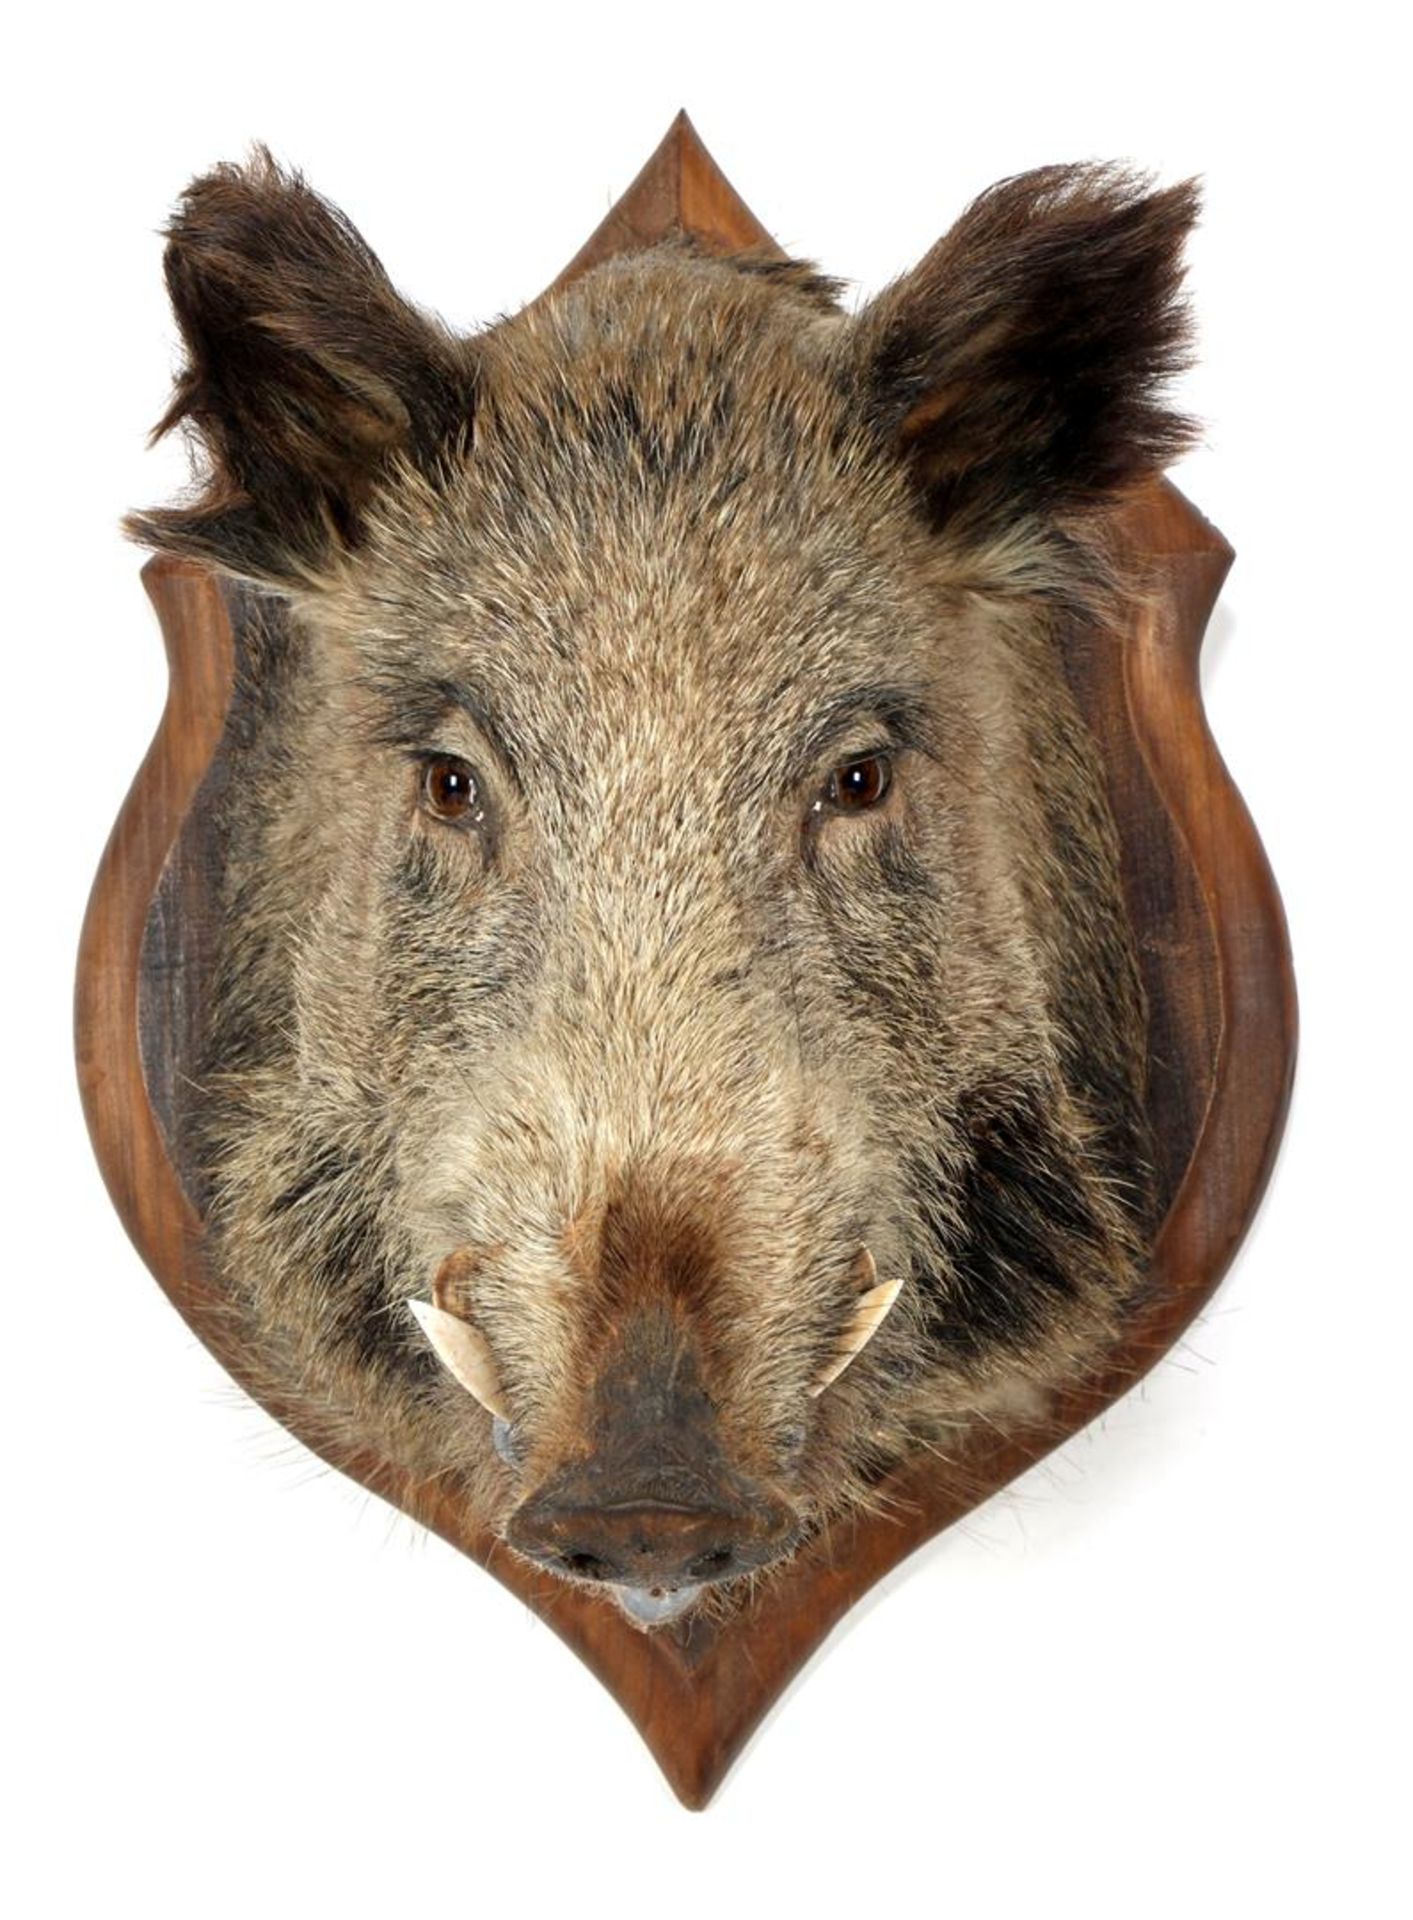 Wild boar - Image 3 of 3